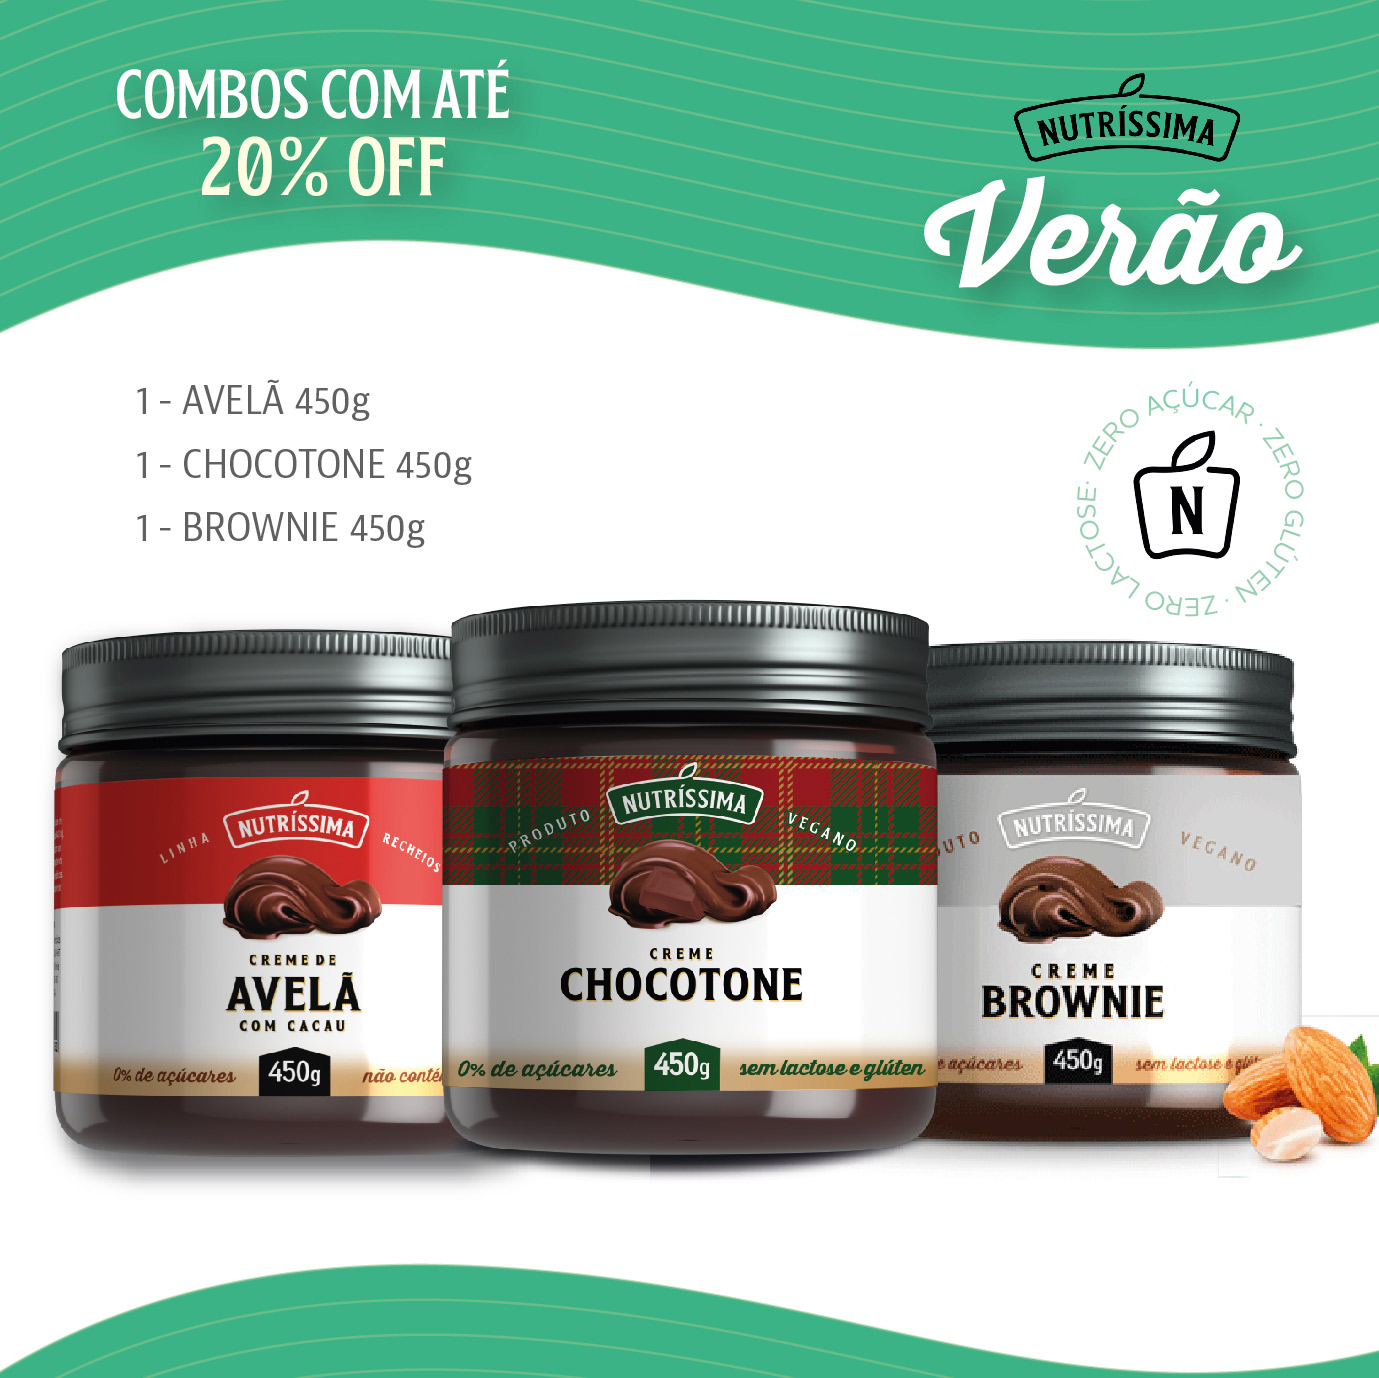 COMBO AVELÃ (450g) + CHOCOTONE (450g) + BROWNIE (450g)